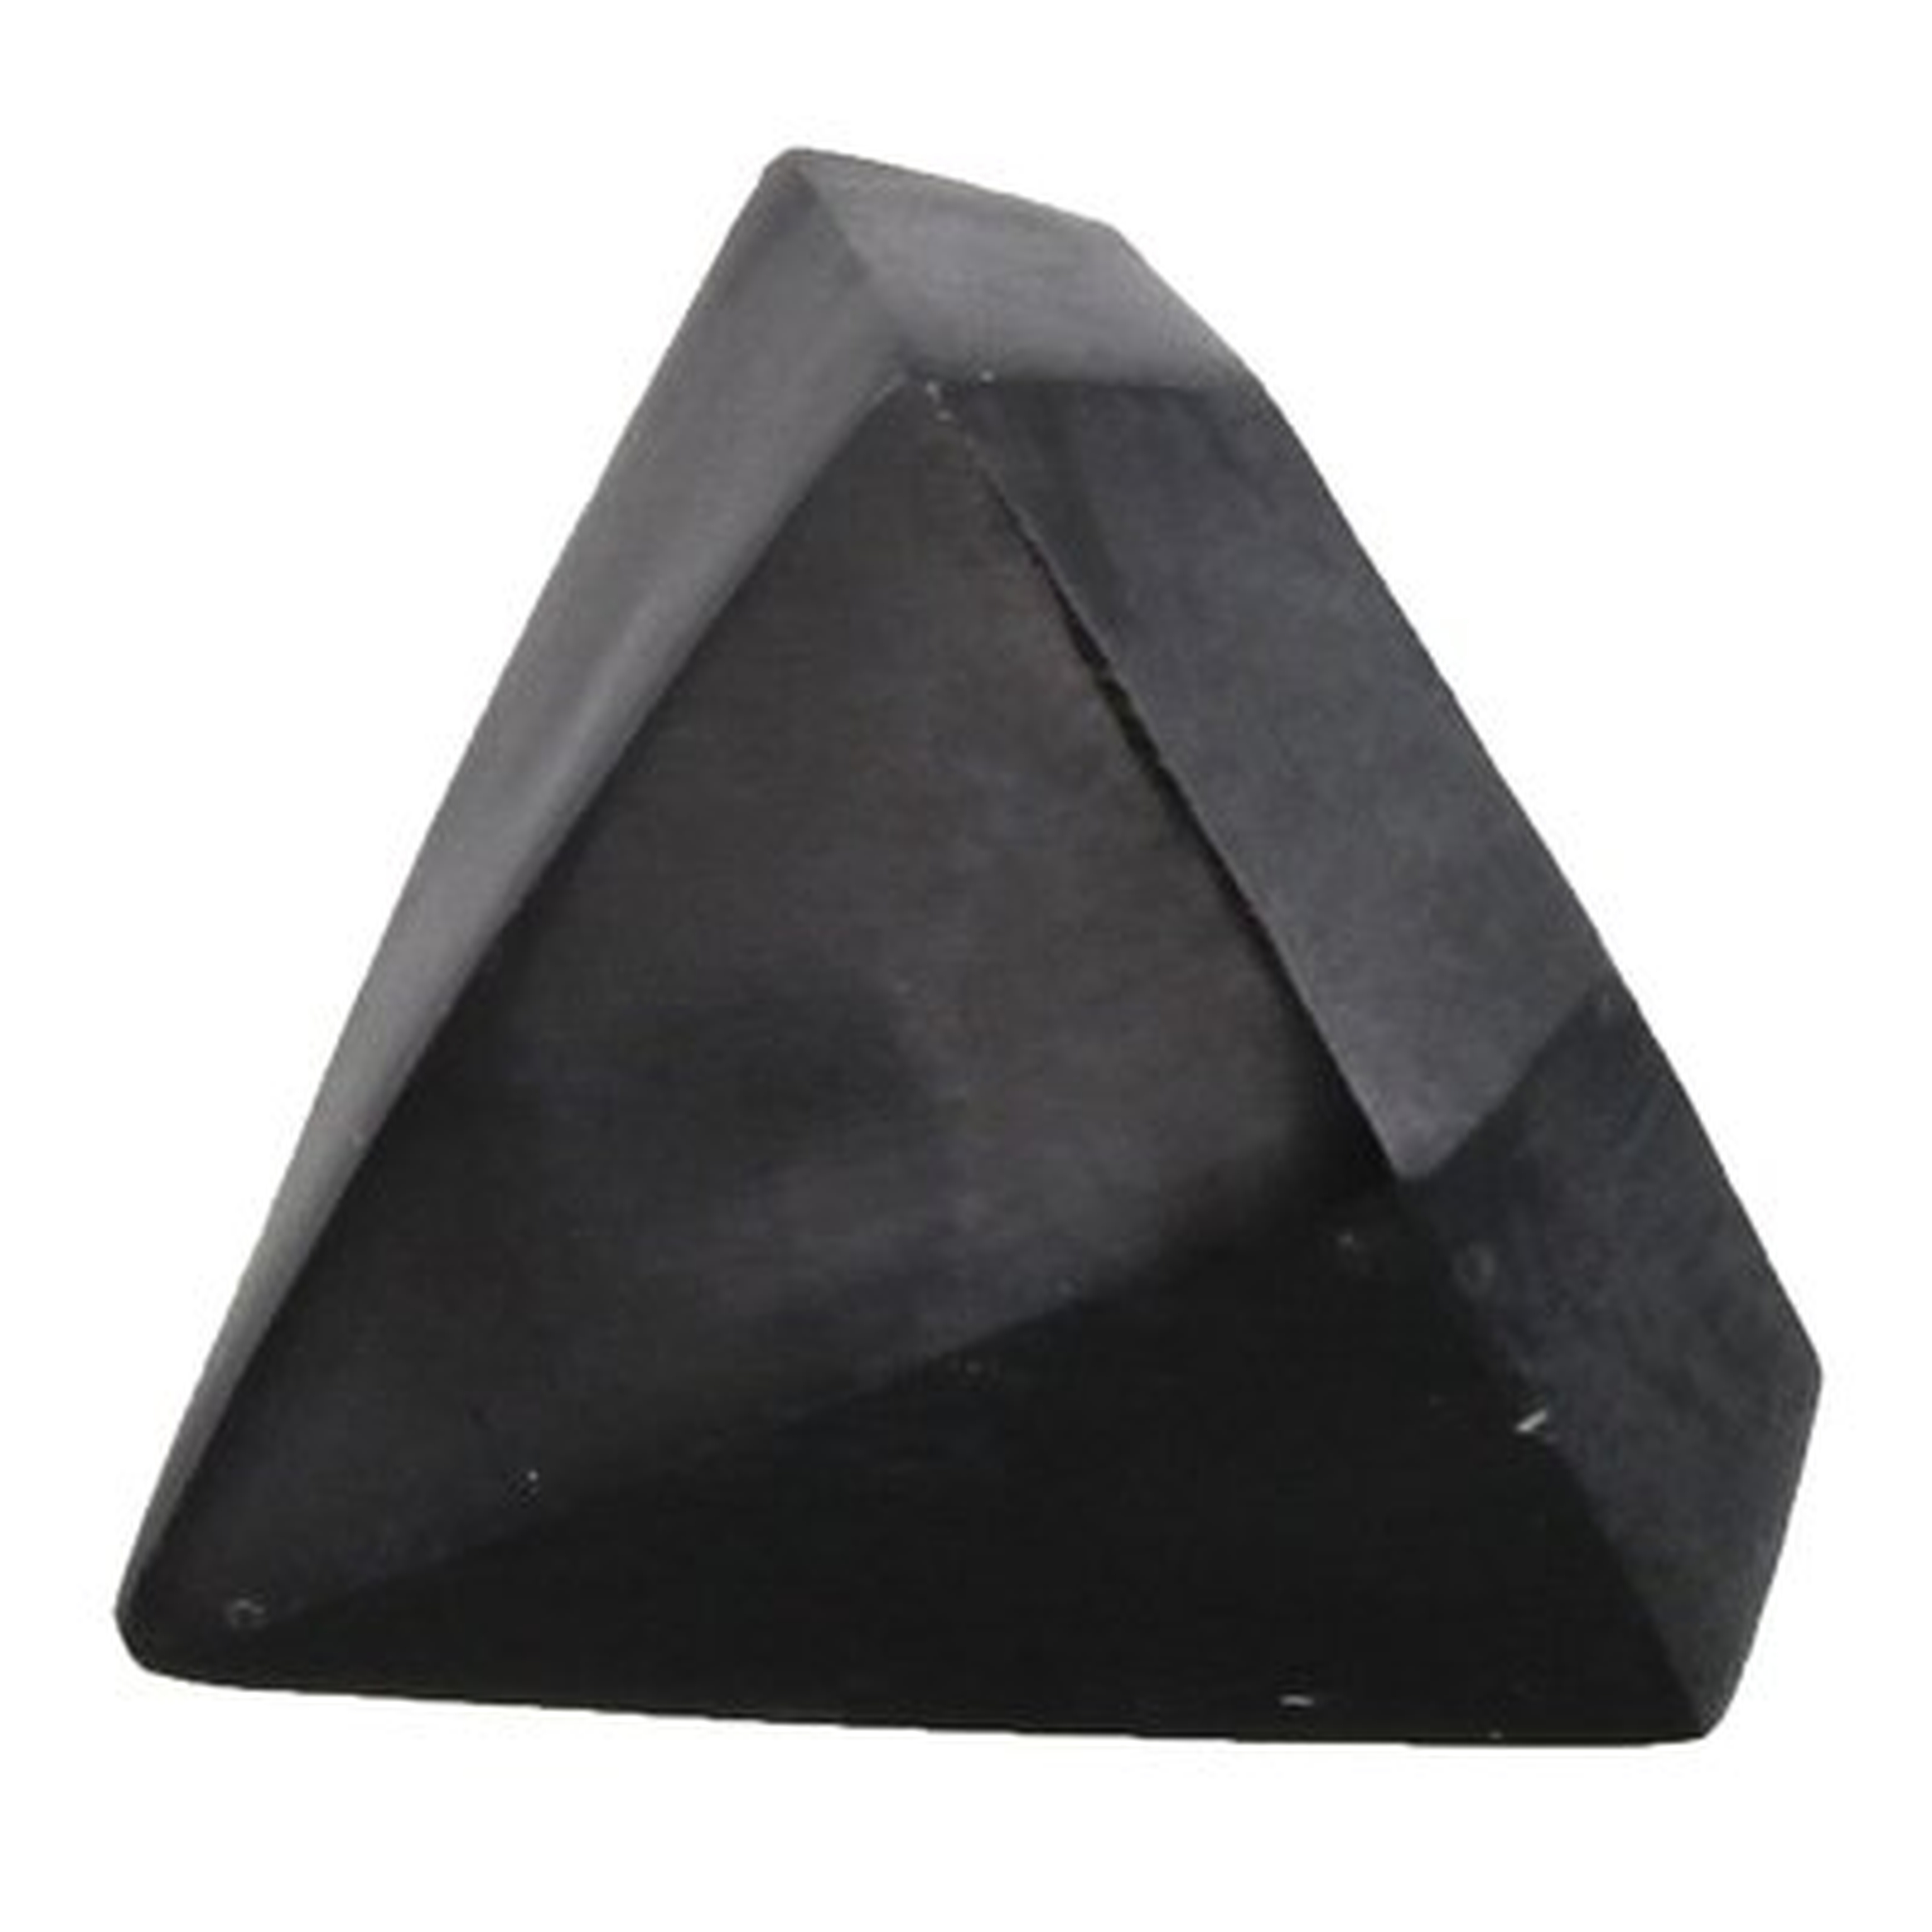 Berrian Soapstone Geometric Object Diamond Sculpture (Set of 4) - Wayfair